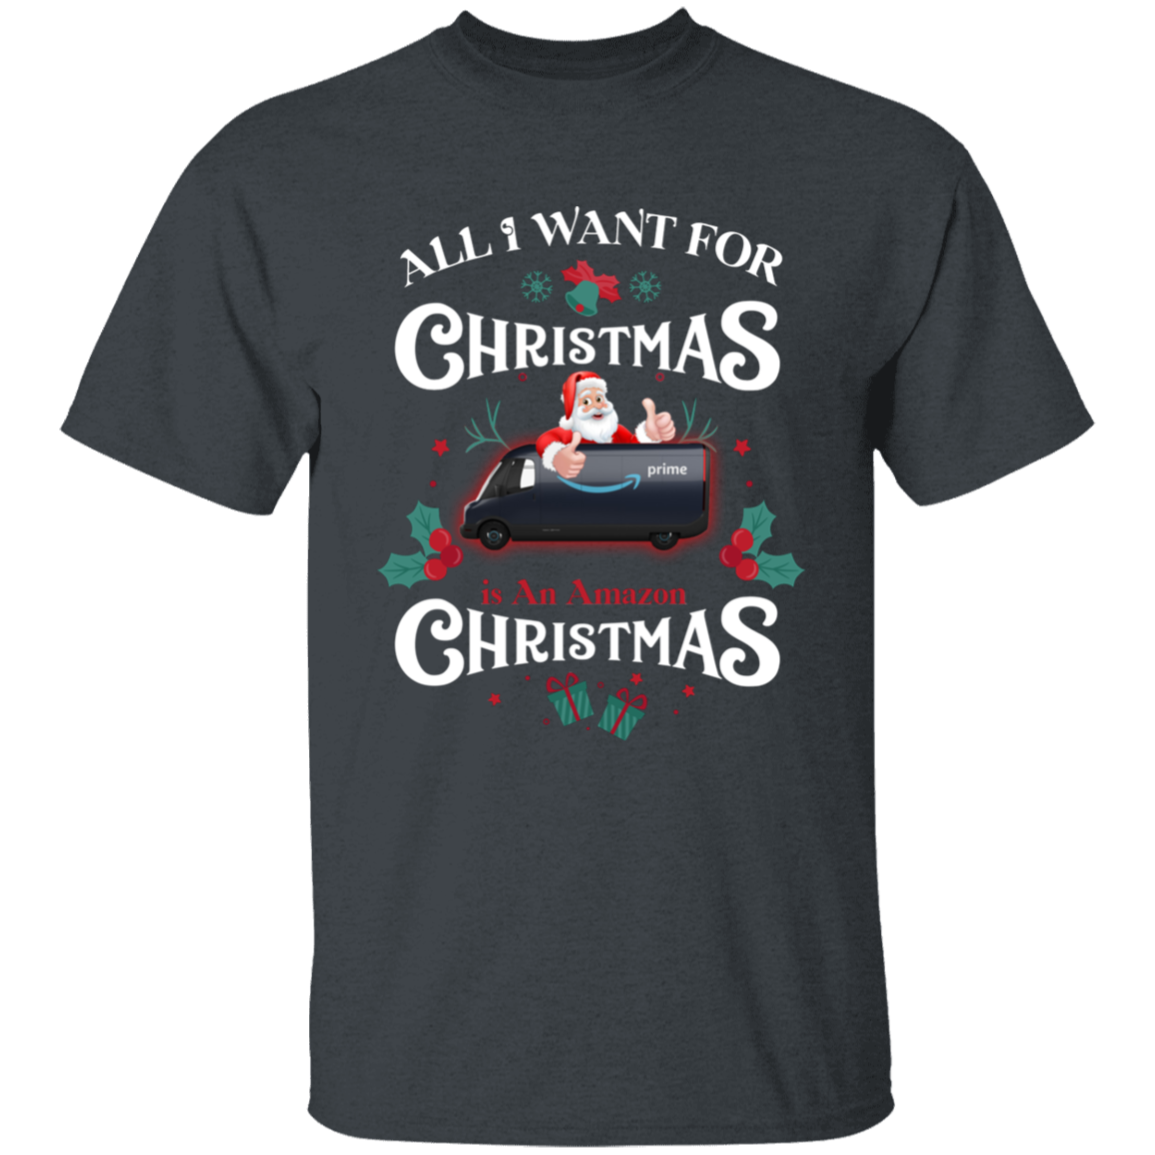 All I want for Christmas is An Amazon Christmas Apparel